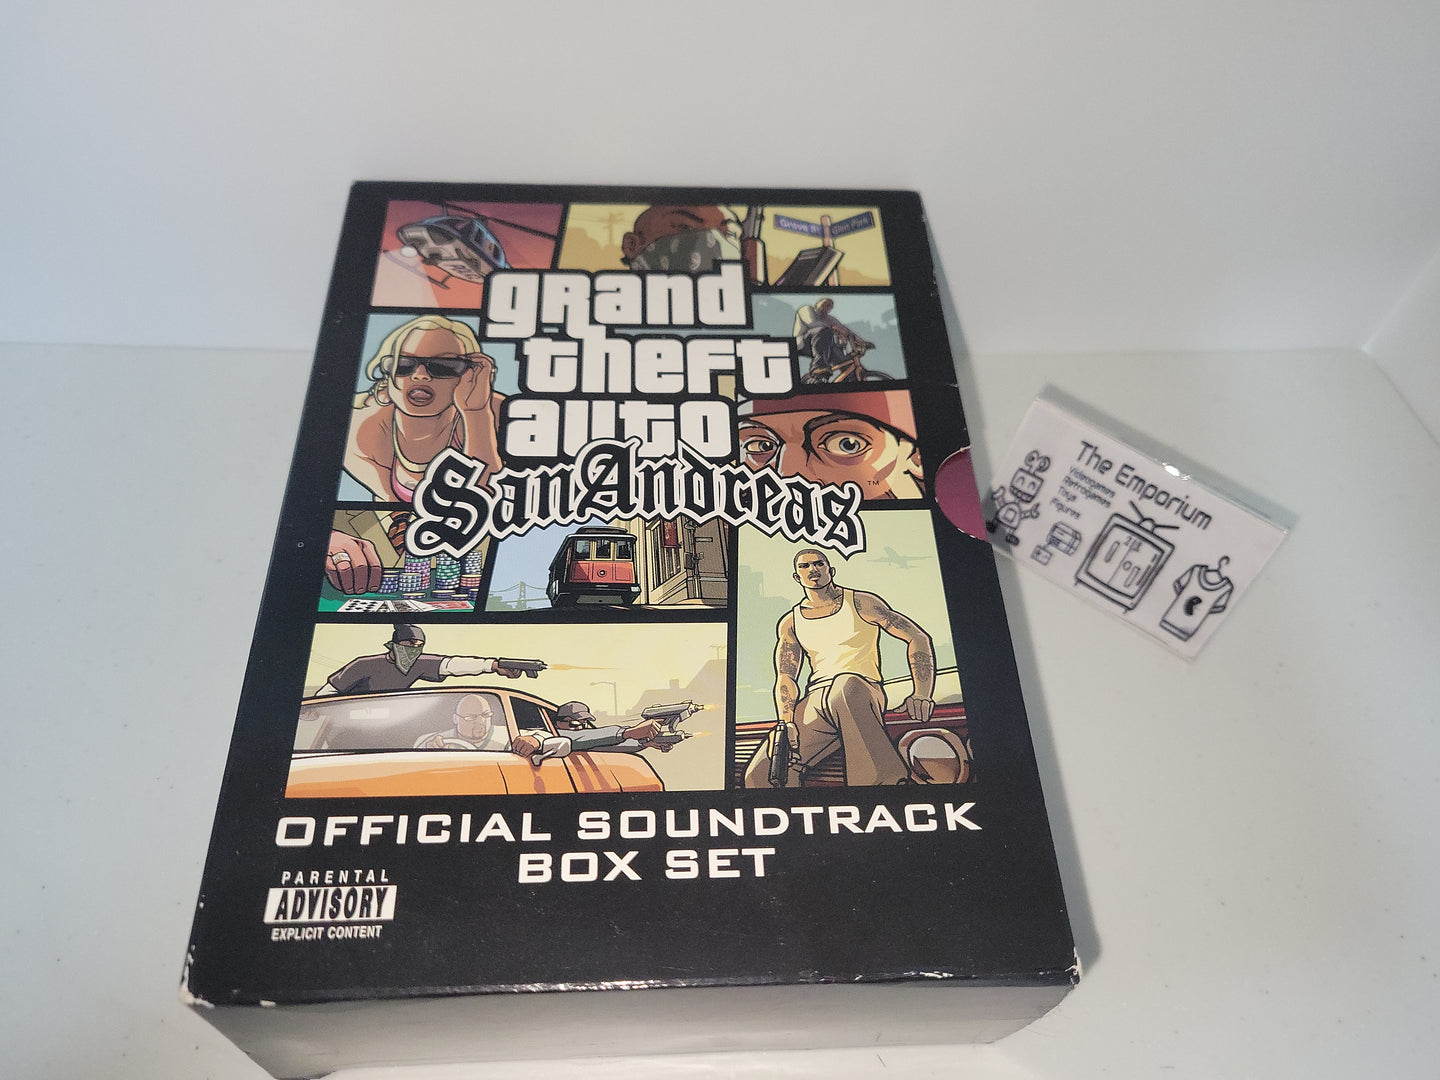 Grand Theft Auto: San Andreas Official Soundtrack Box Set 2004 - Music cd soundtrack